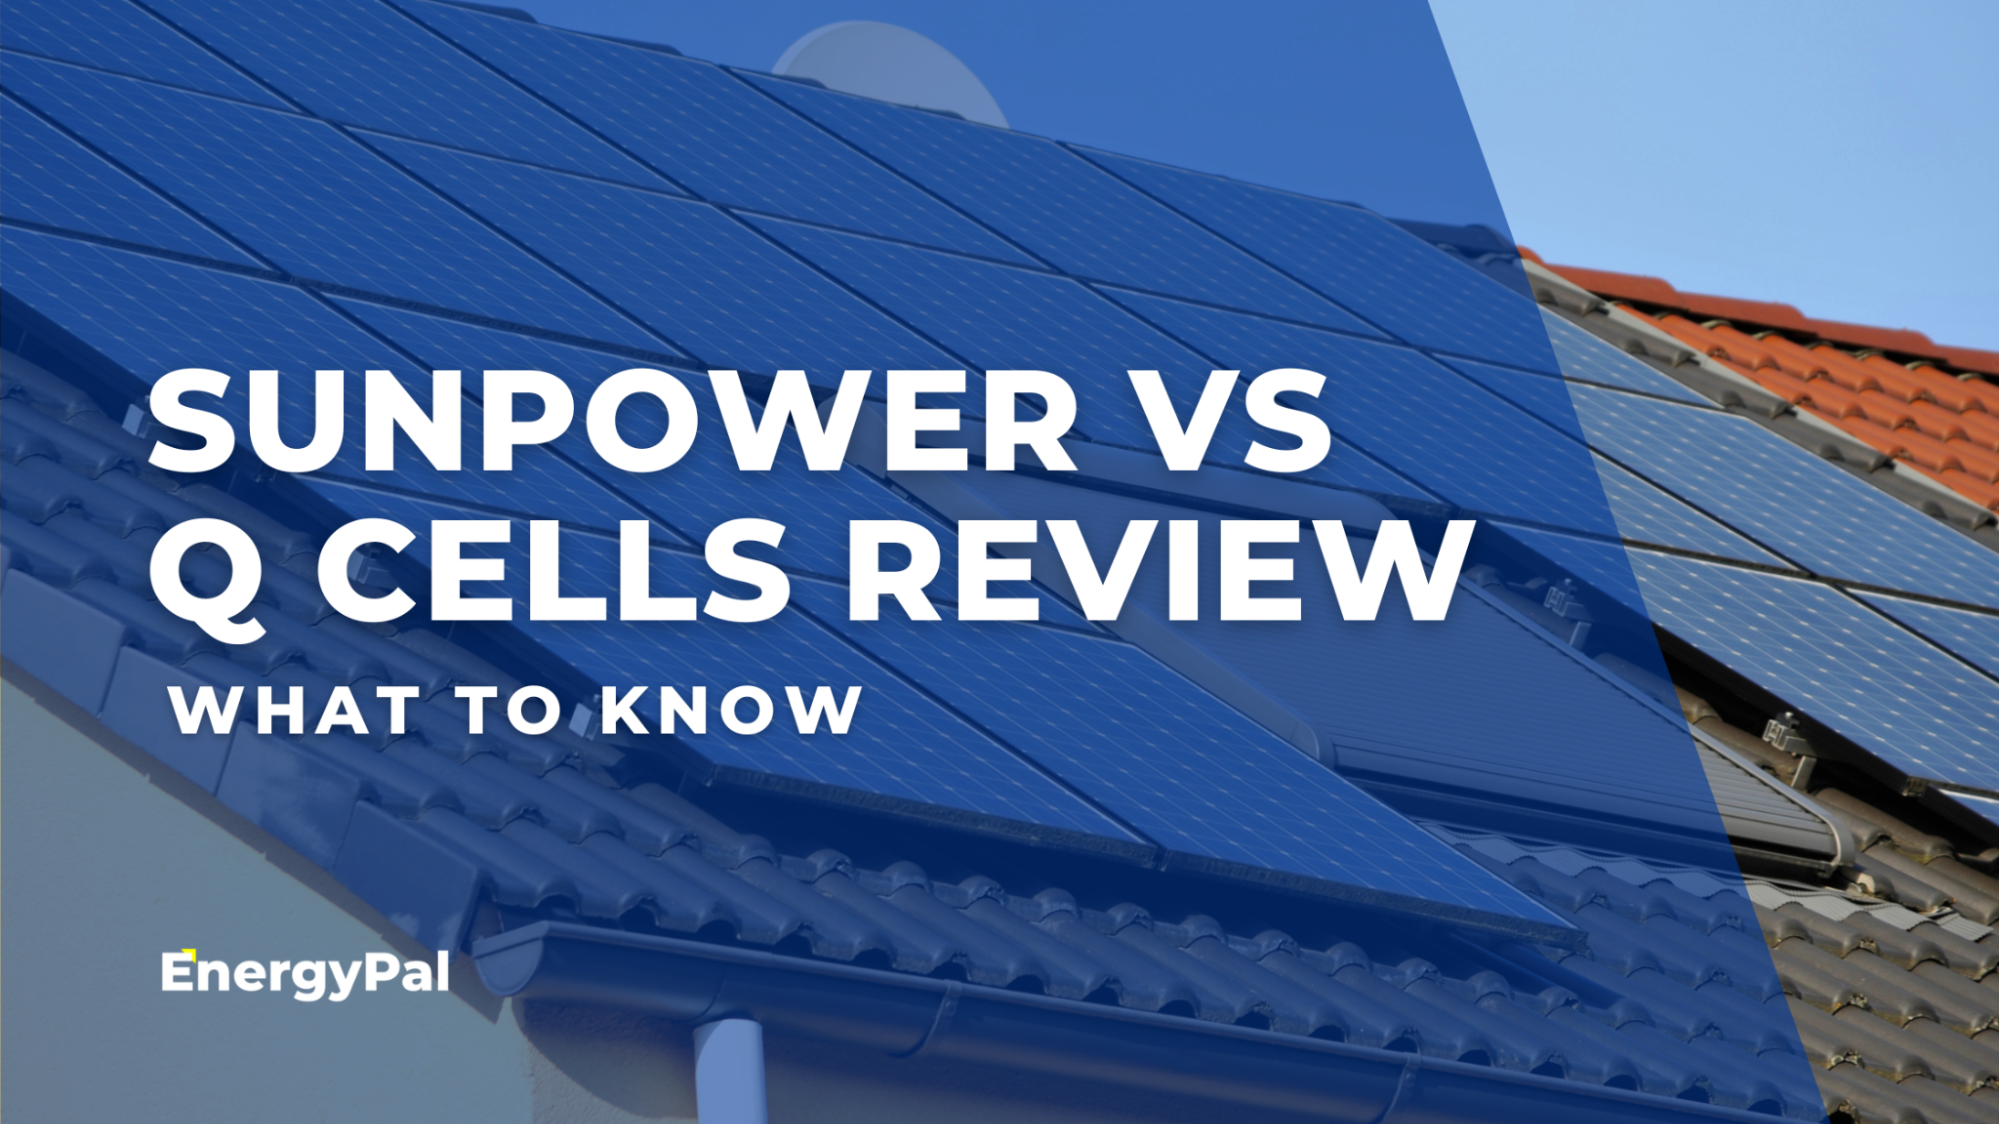 SunPower vs Q CELLS